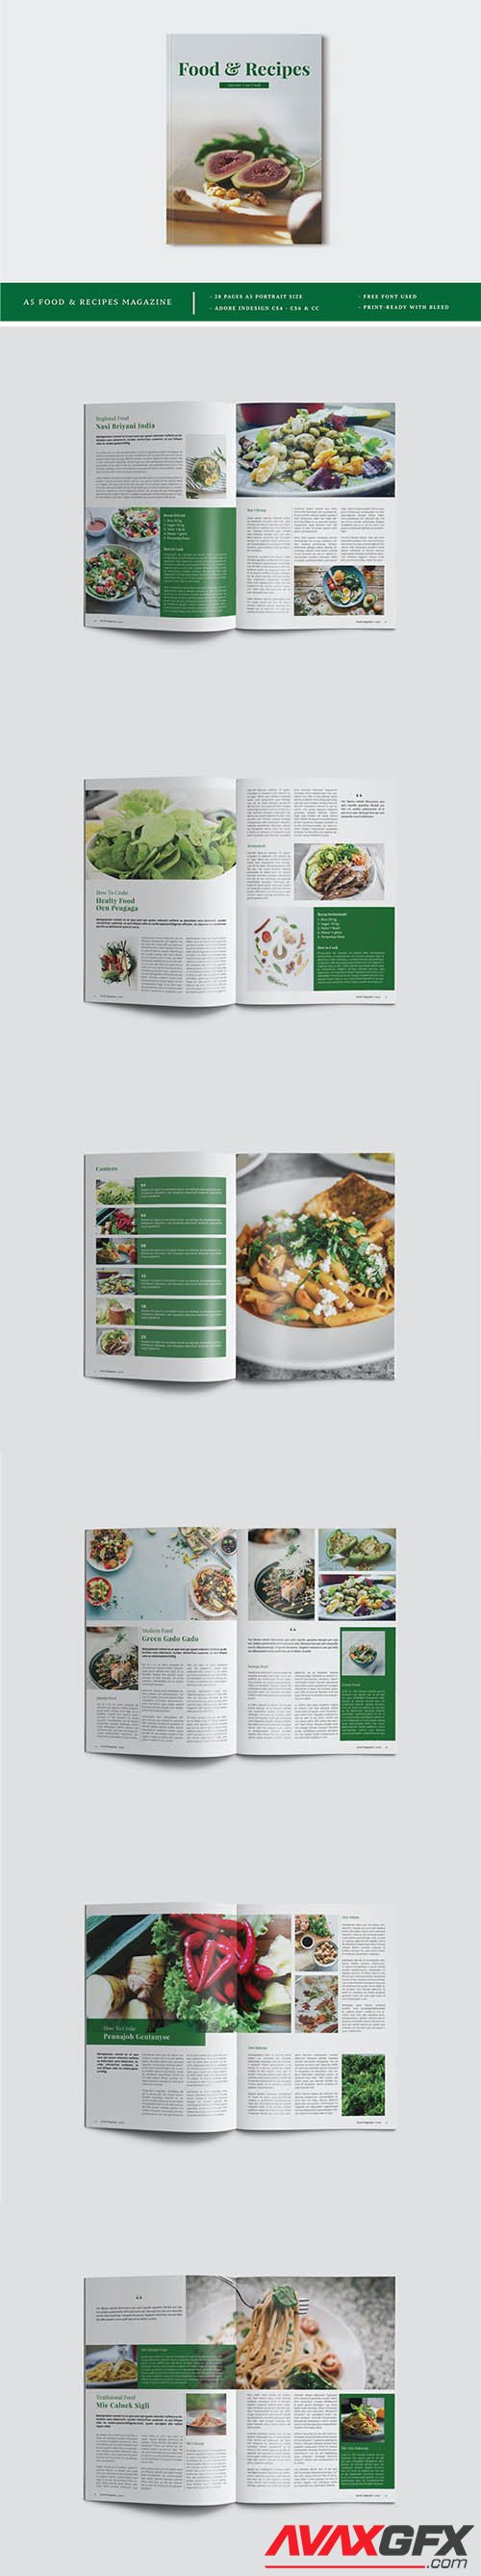 A5 Food & Recipes Magazine